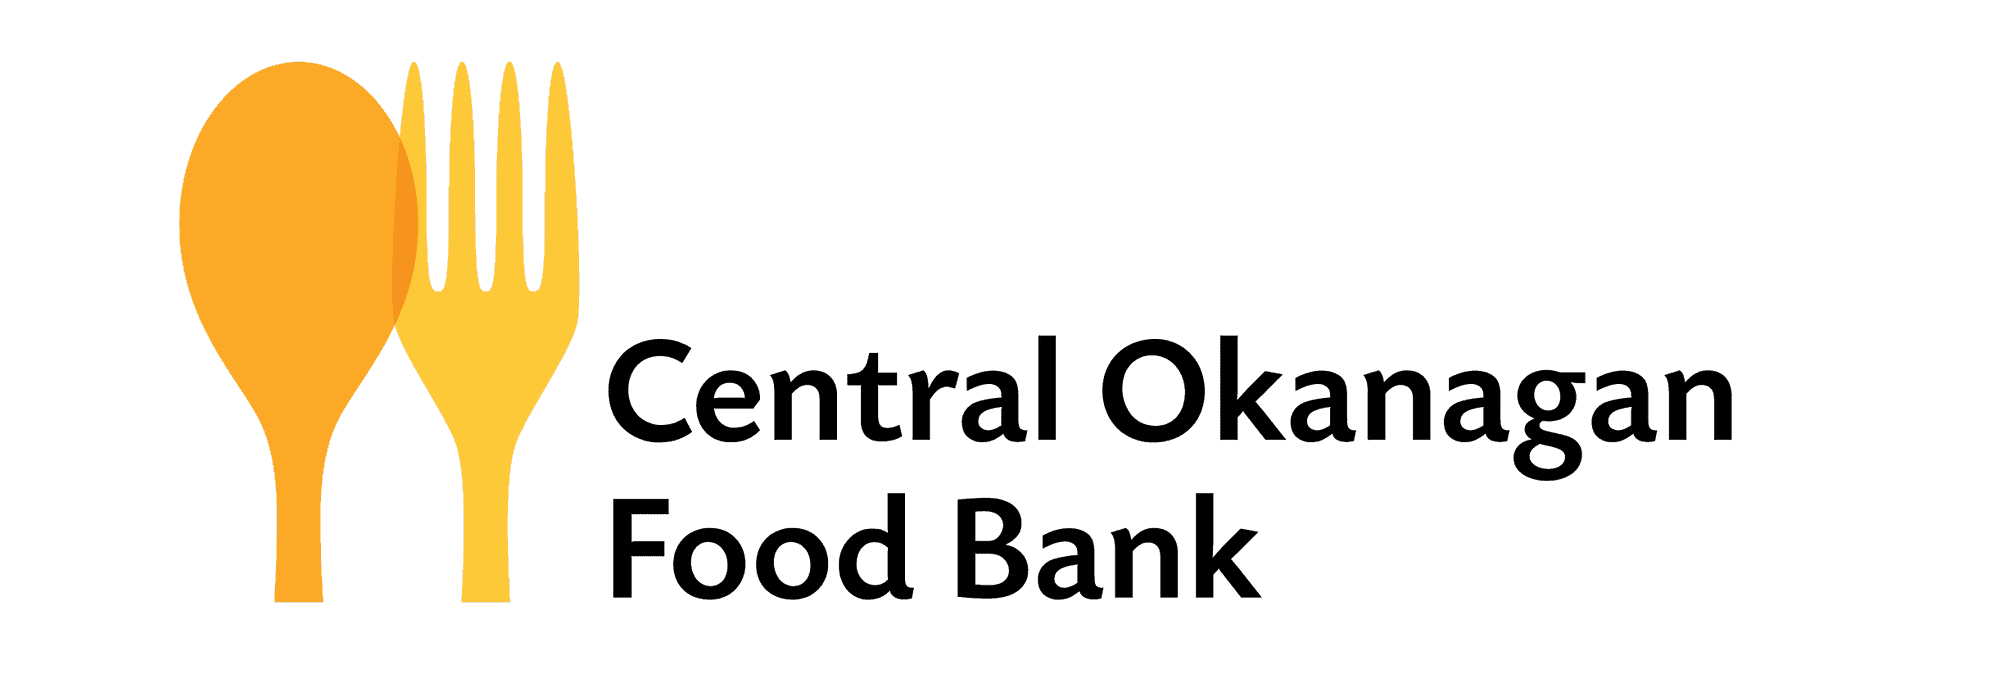 Central Okanagan Food Bank's Logo